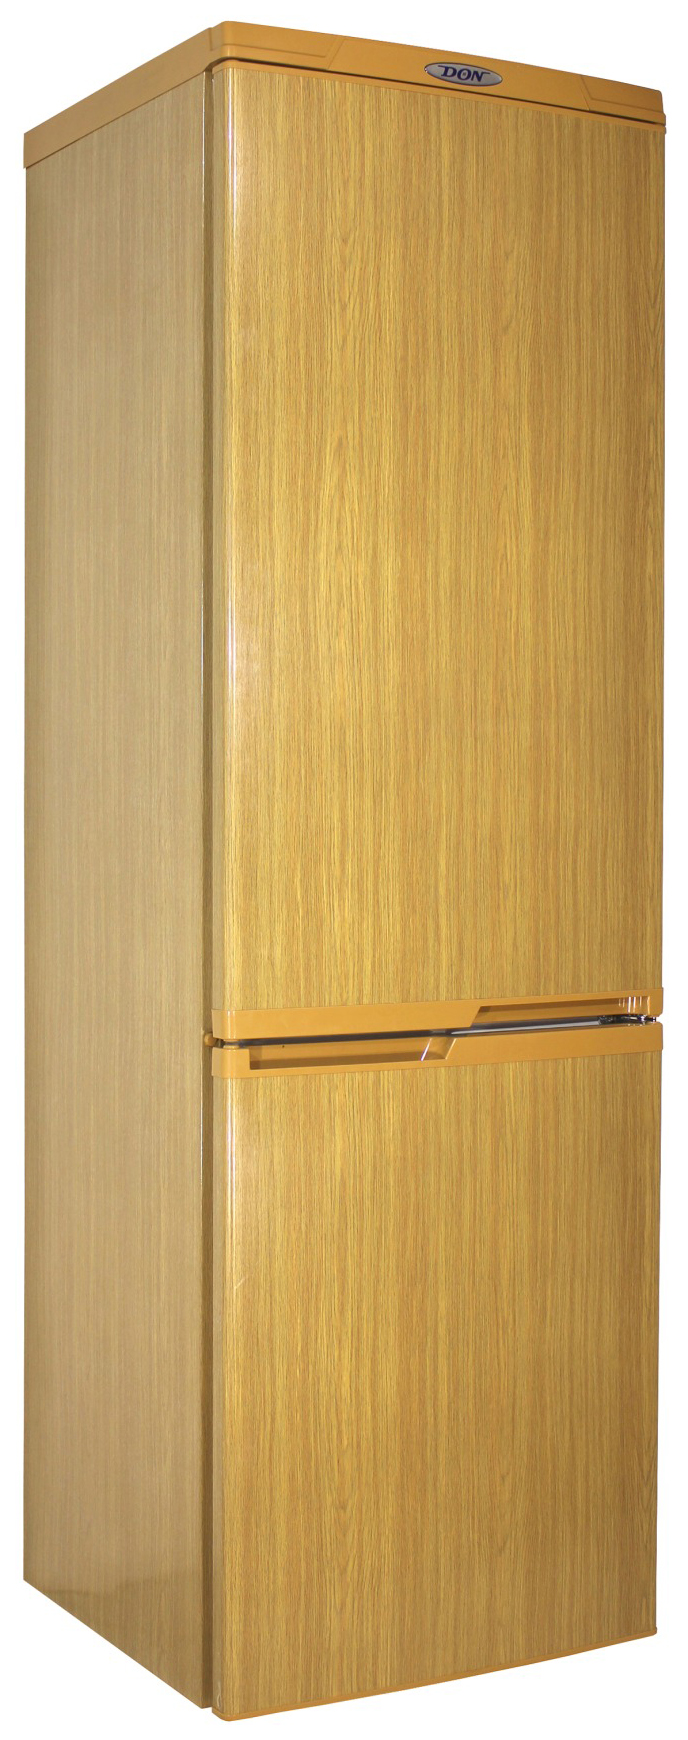 Холодильник DON R 291 DUB коричневый